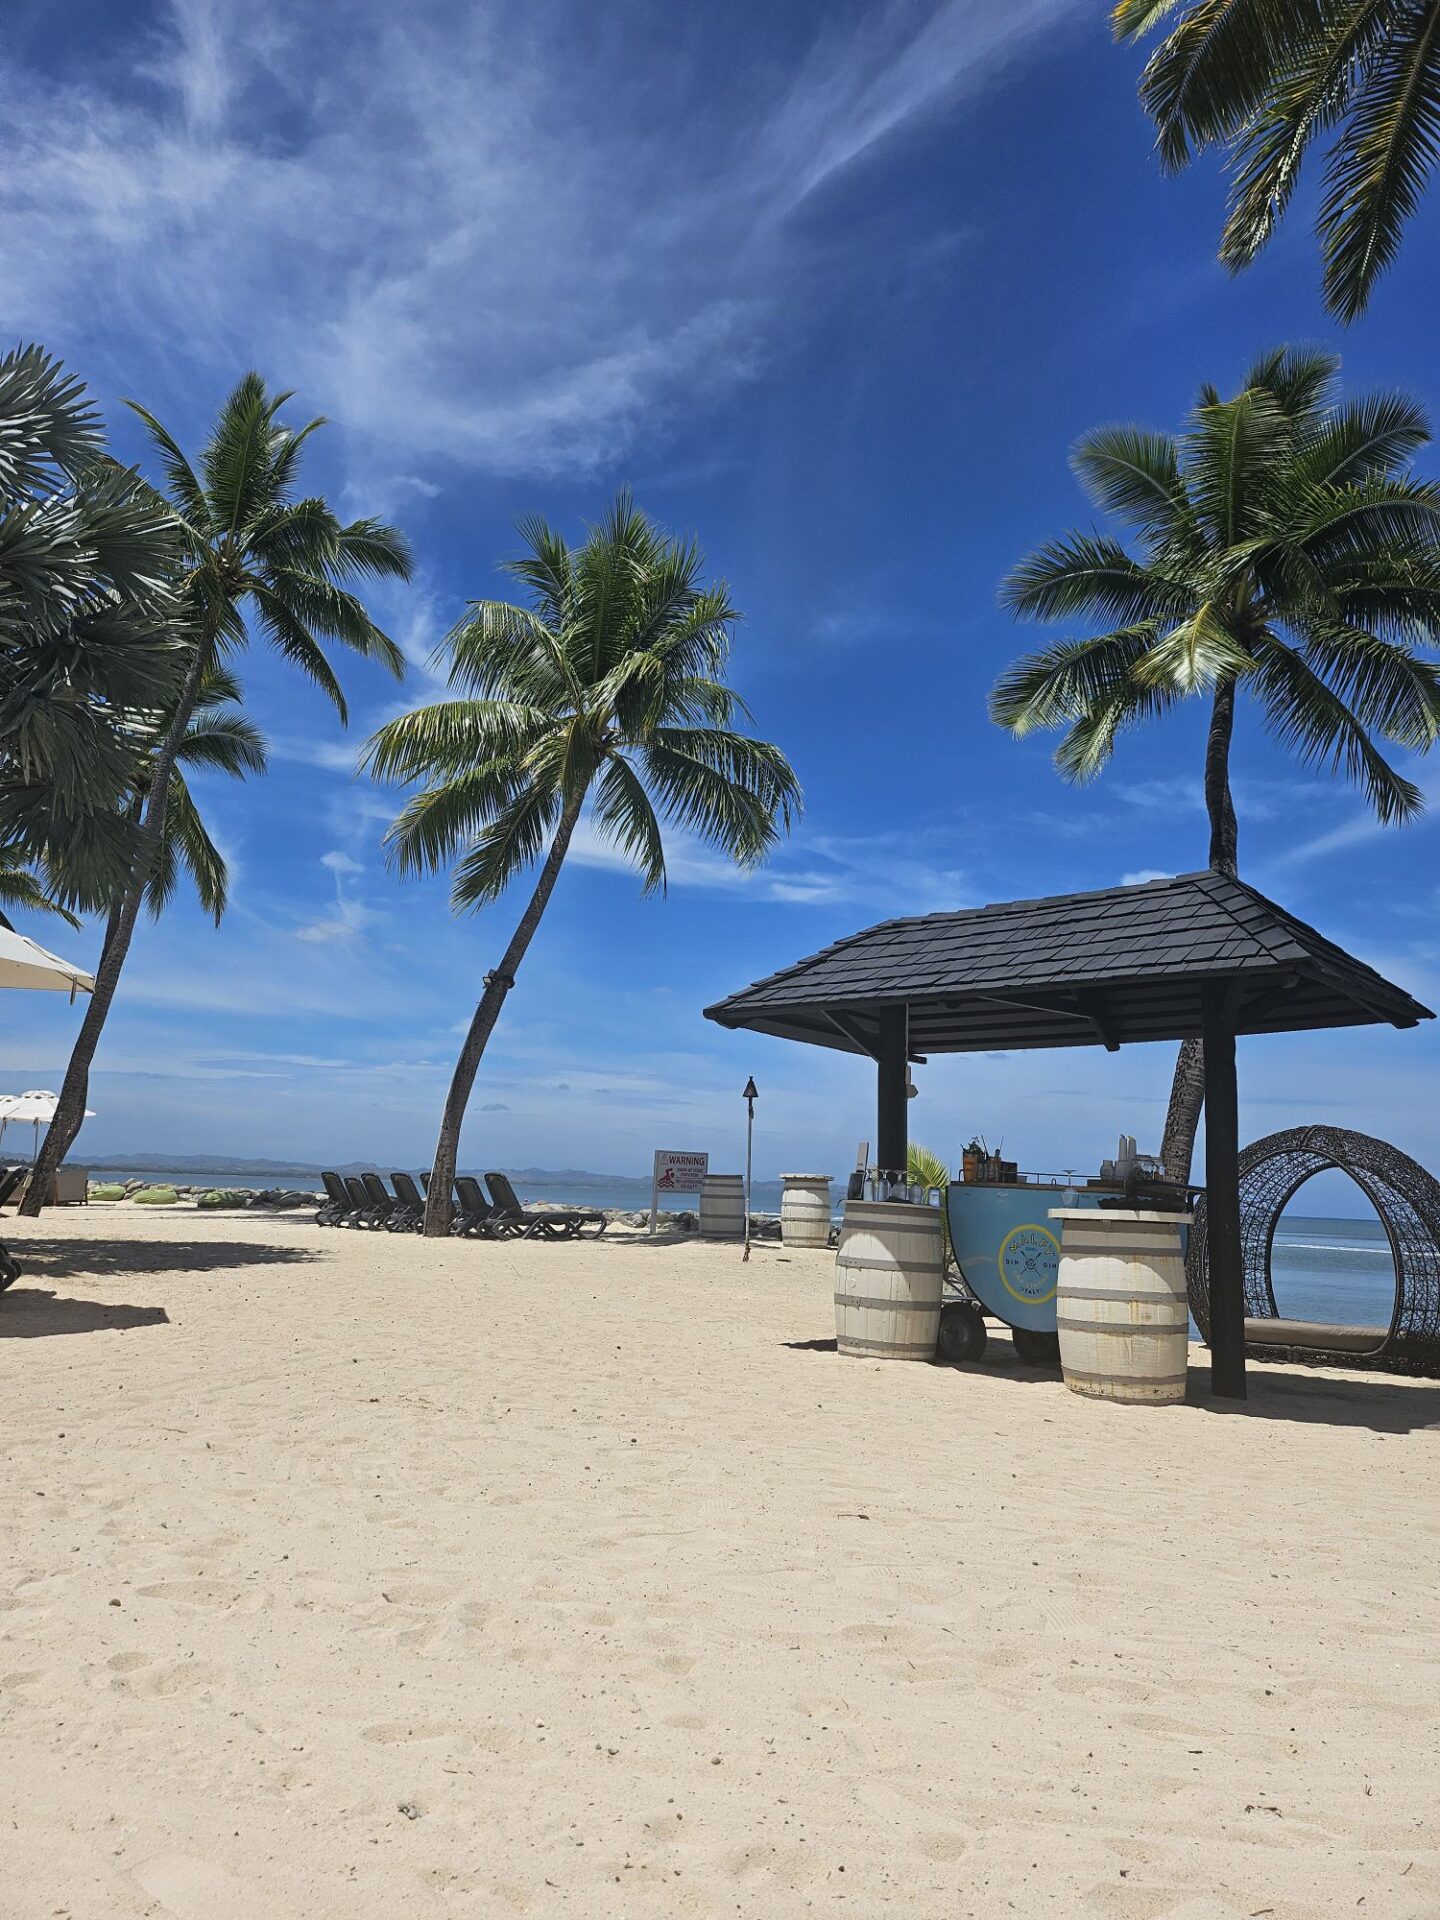 a beach with palm trees and a gazebo